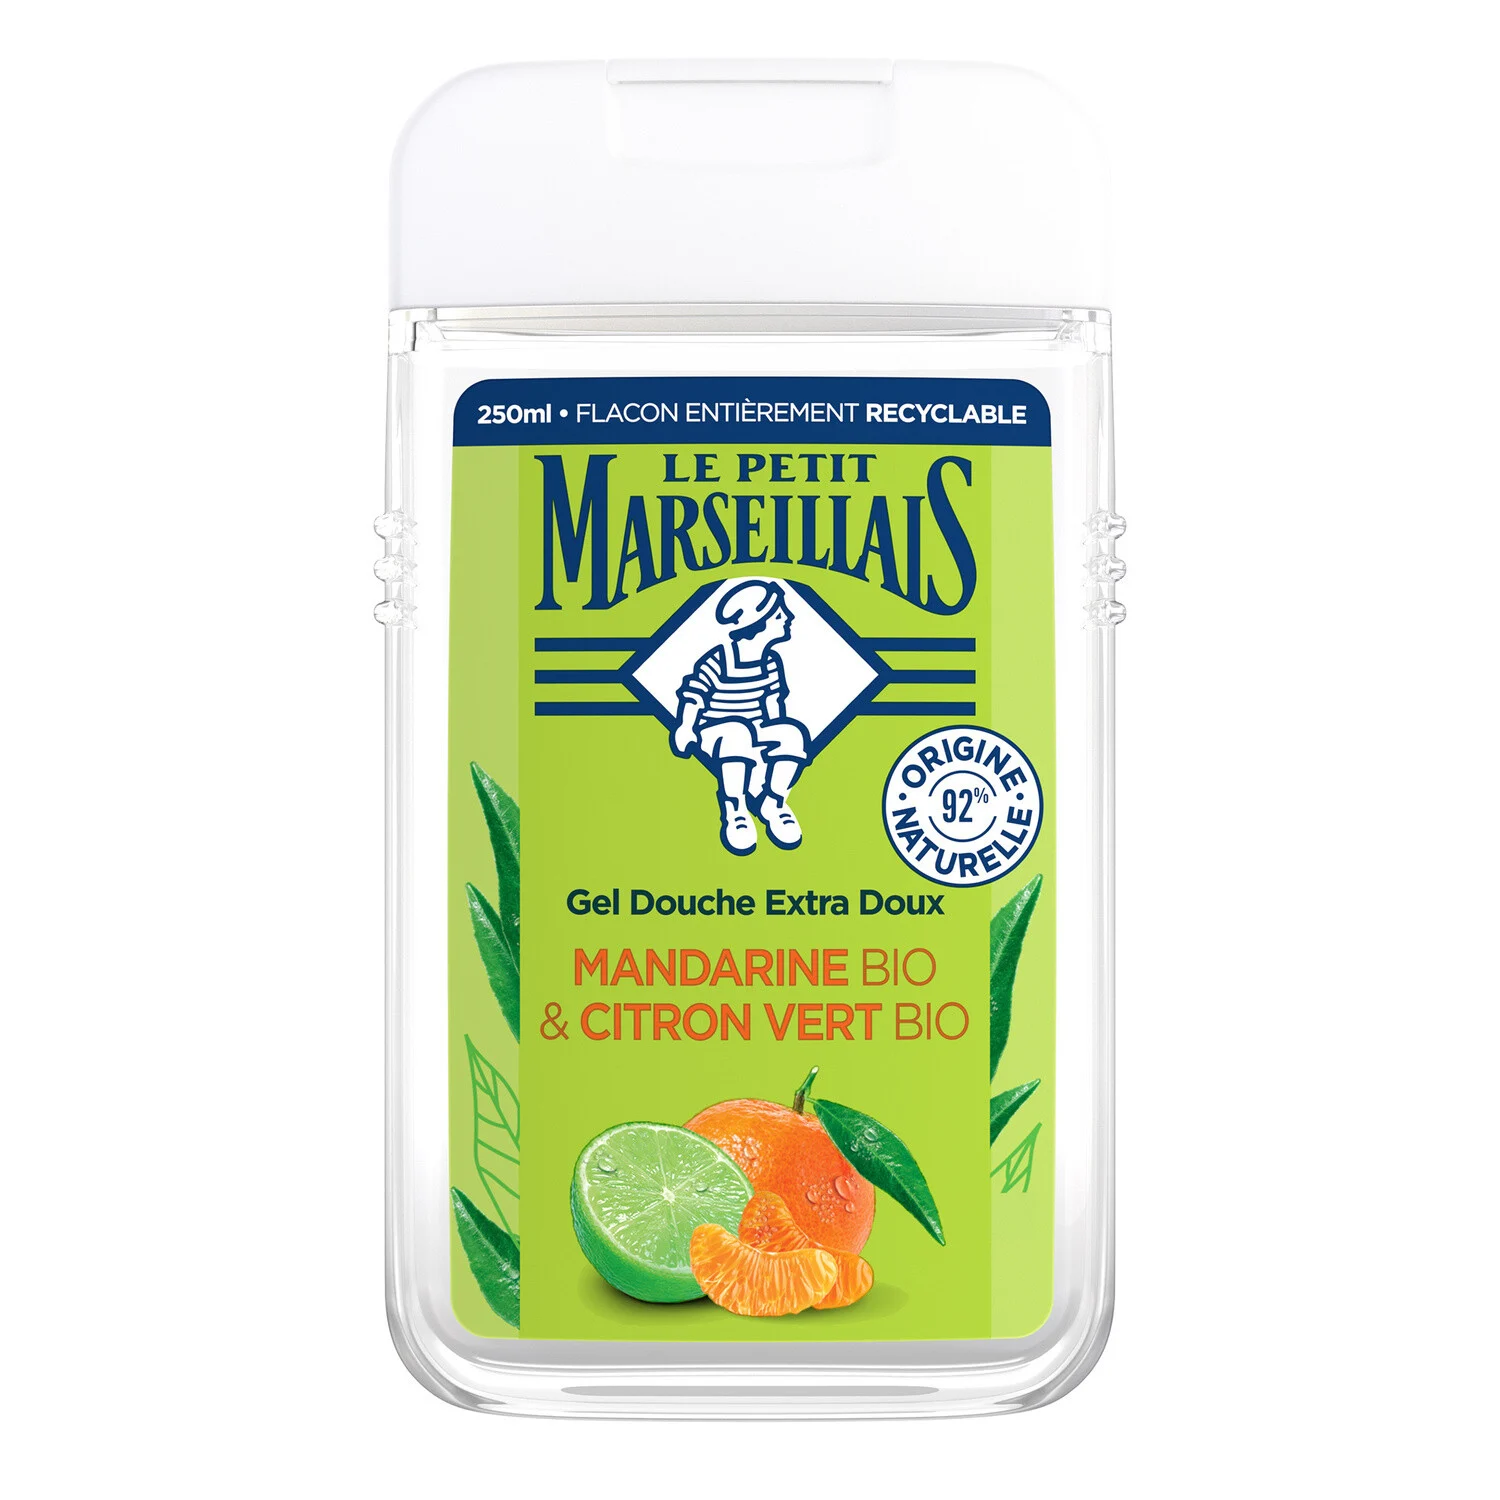 Gel Douche Mandarine & Citron Vert Hydrate Et Rafraîchit, Bio 250ml - Le Petit Marseillais